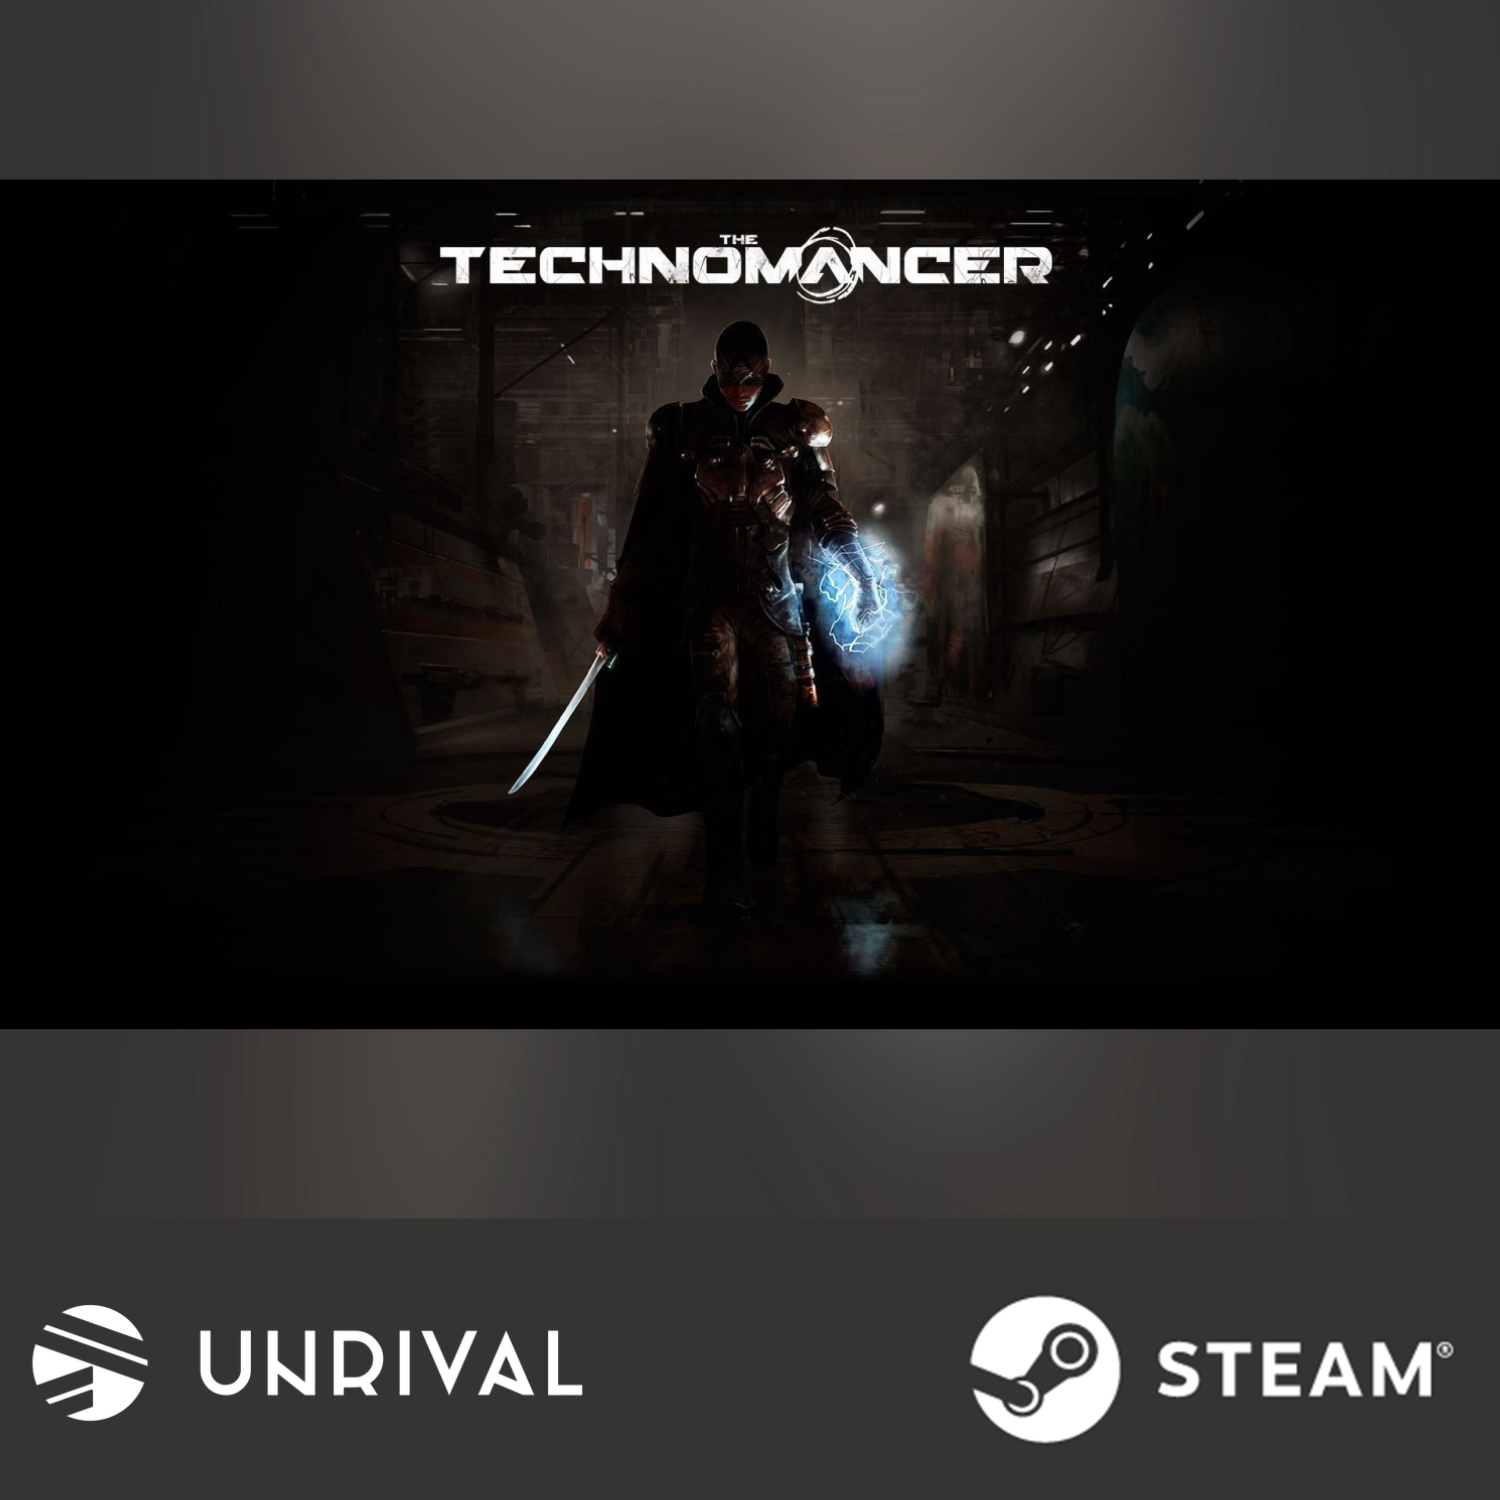 The Technomancer PC Digital Download Game (Single Player) - Unrival